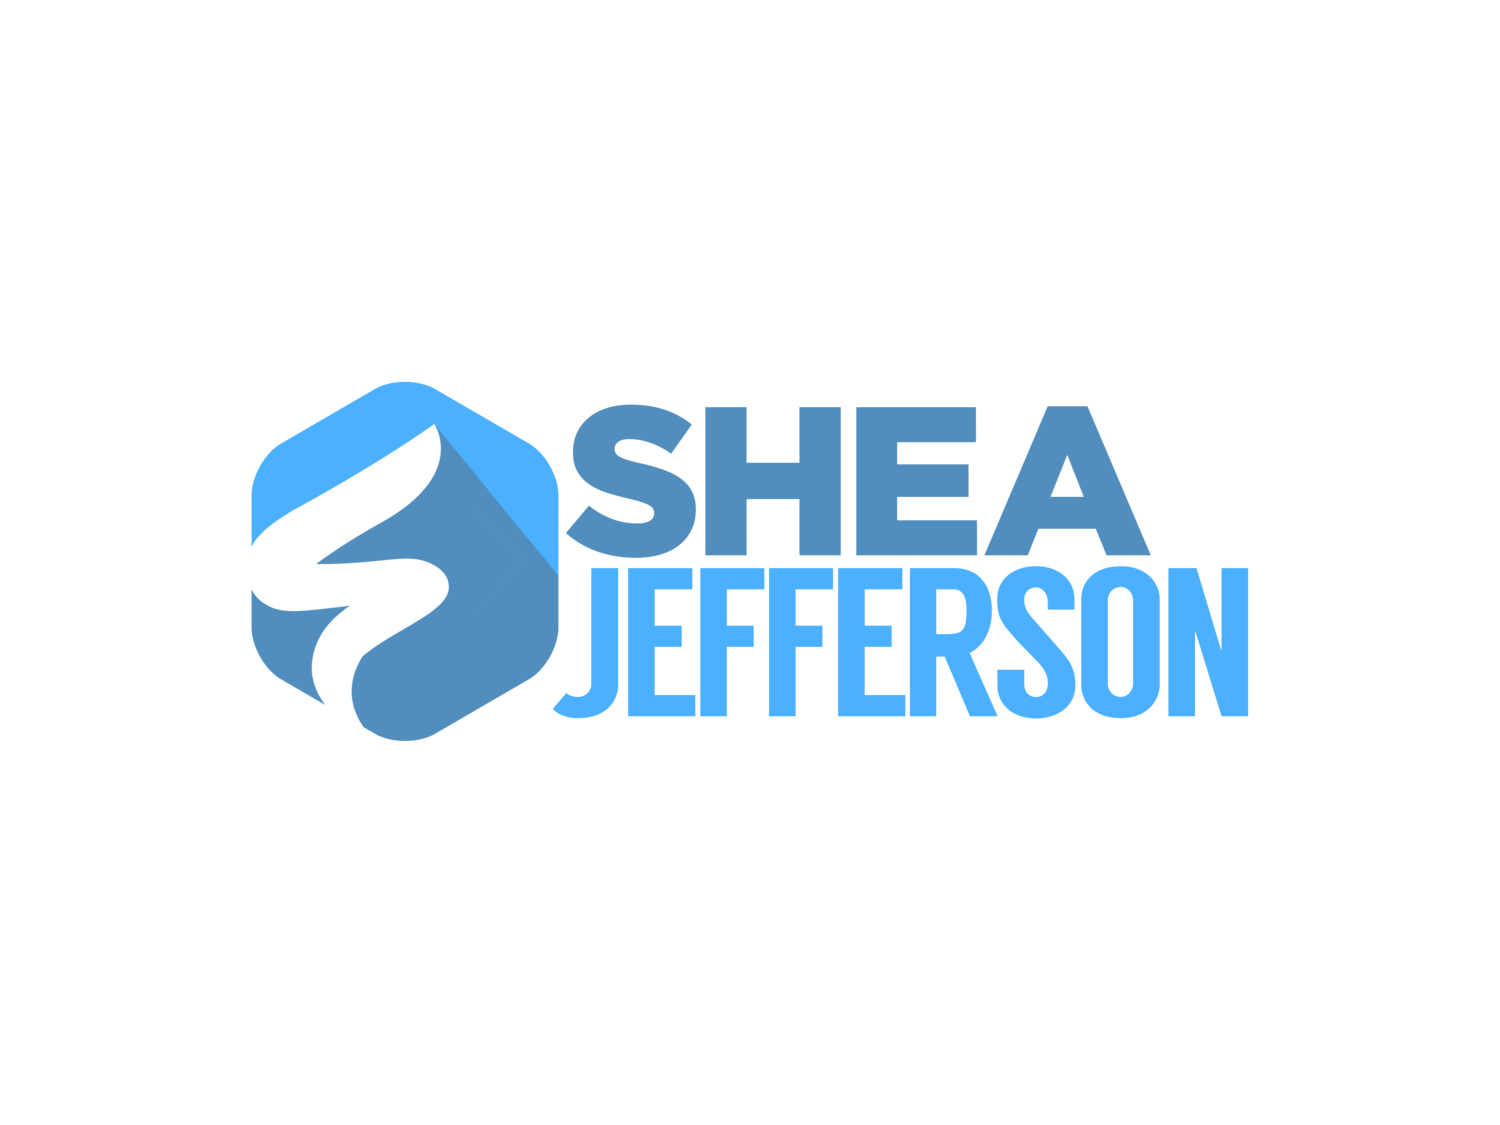 Shea Jefferson